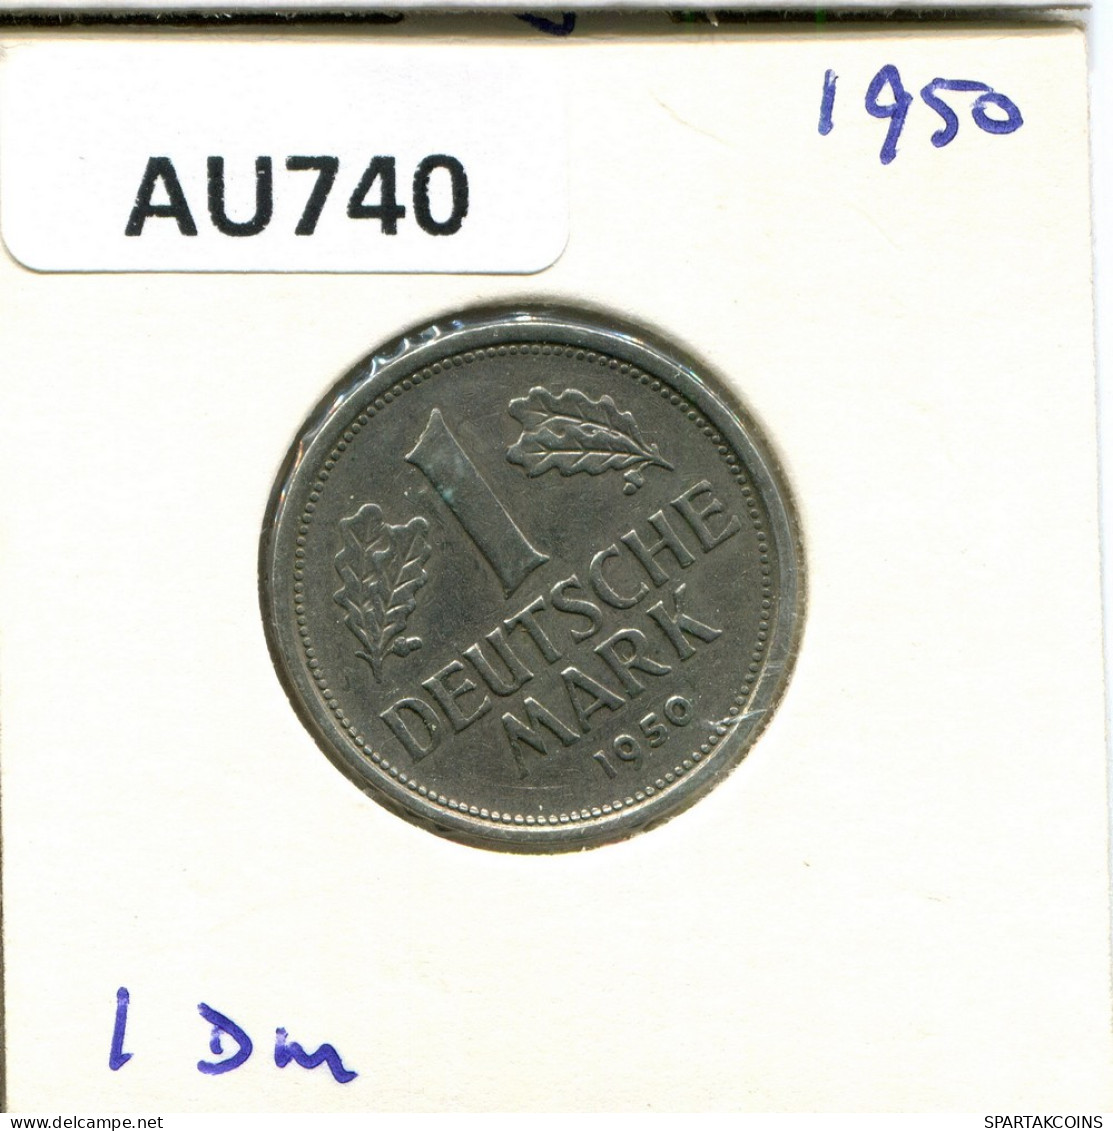 1 DM 1950 J WEST & UNIFIED GERMANY Coin #AU740.U - 1 Mark